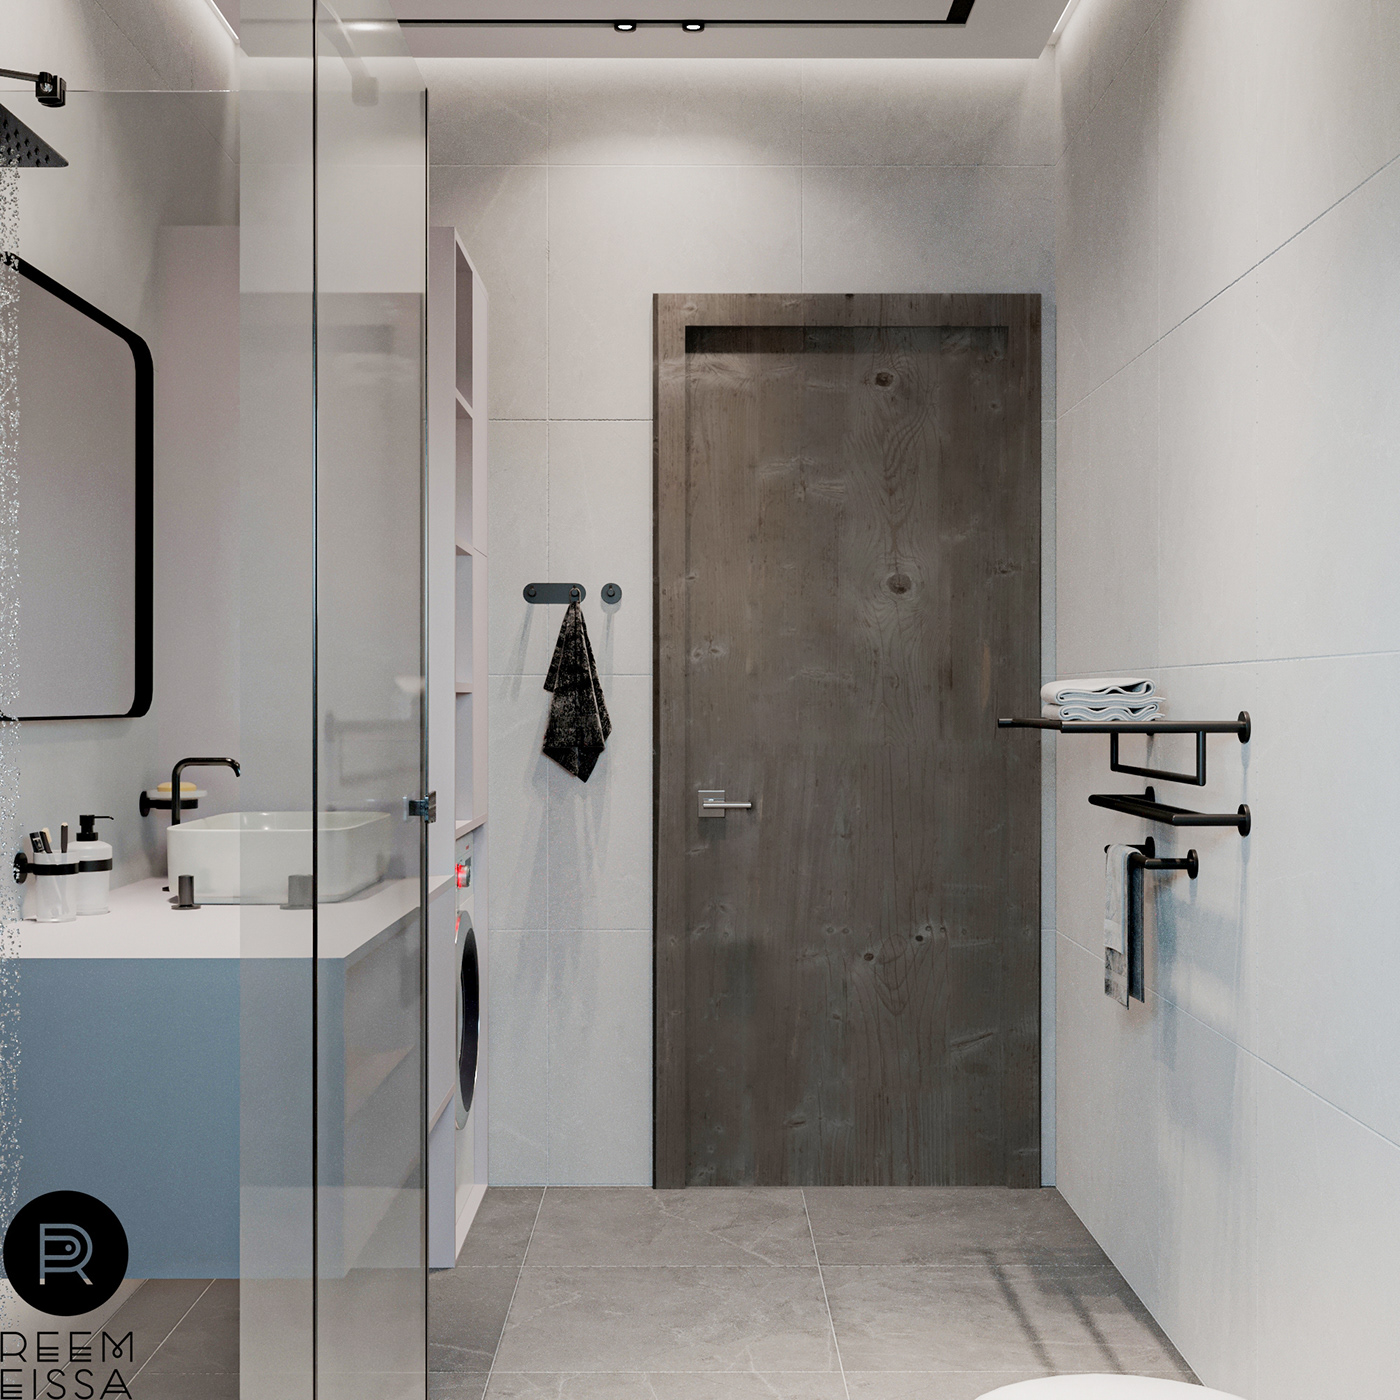 3d modeling 3ds max architecture bathroom corona design Interior Render revit shop drawing